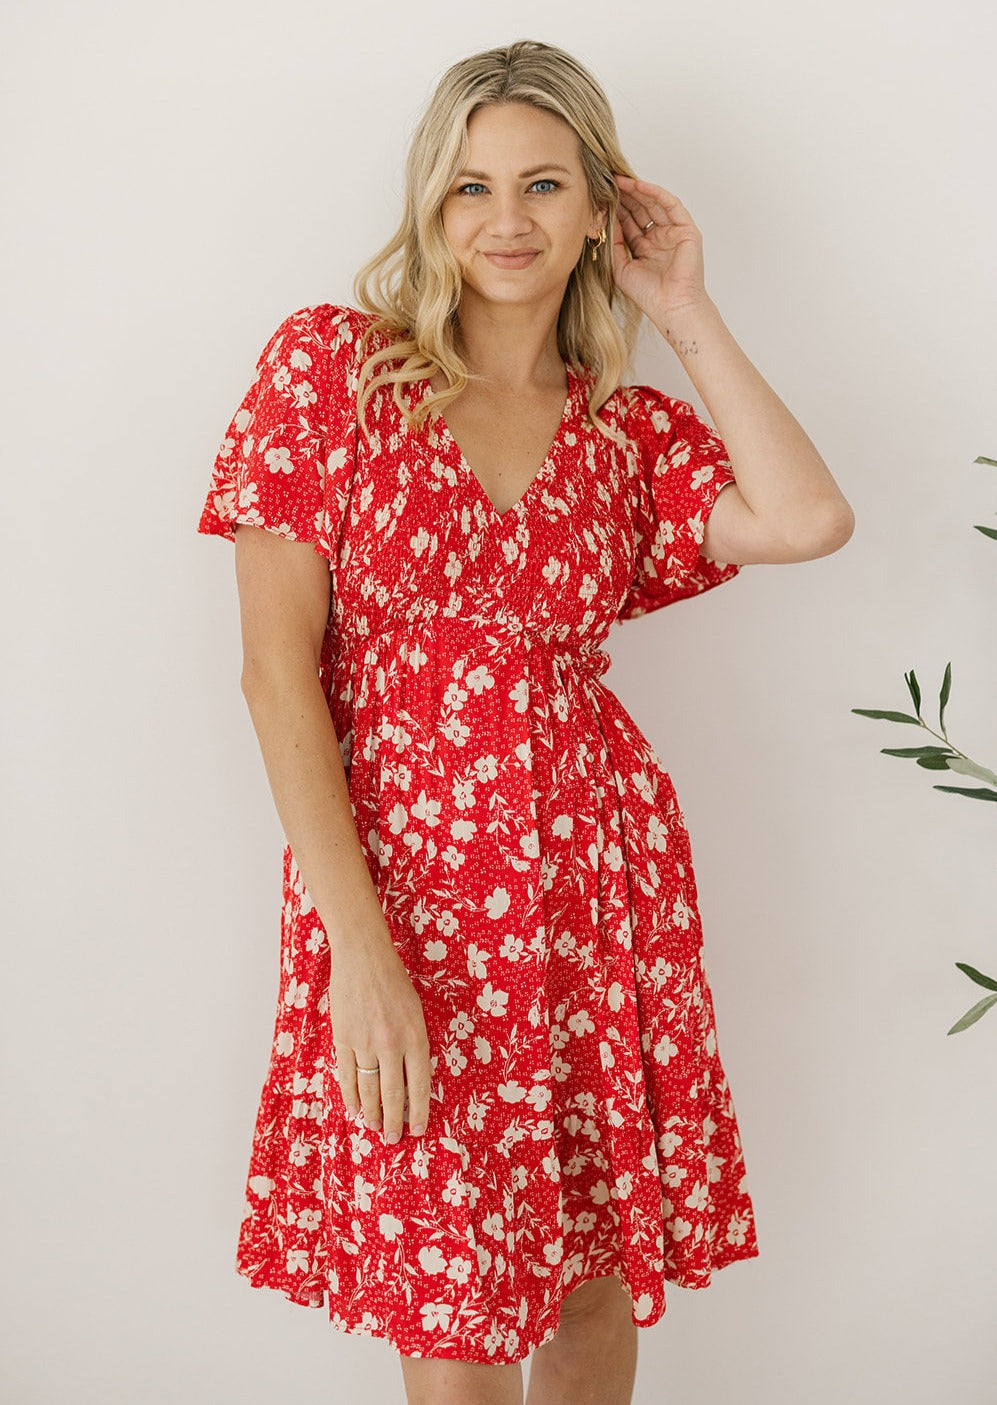 summer floral knee-length dress for women over 40